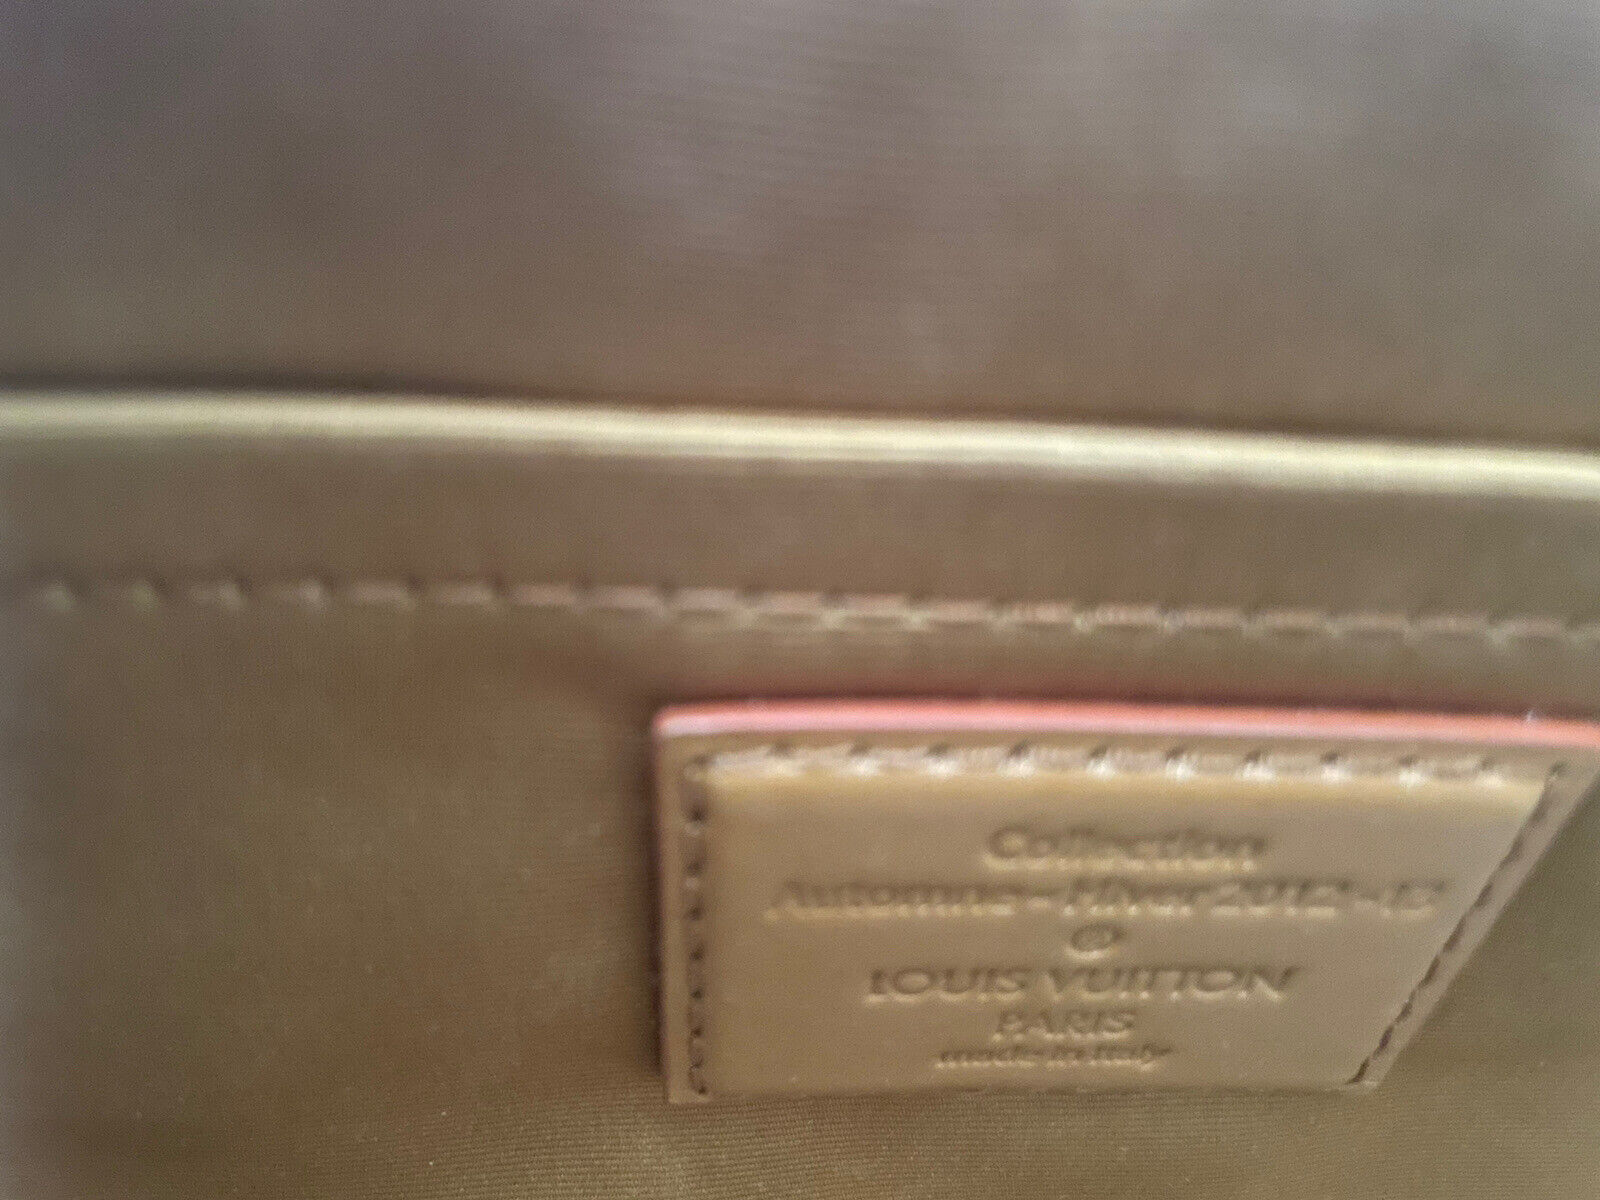 Louis Vuitton Monogram Woolly Sunshine Express Speedy Bag